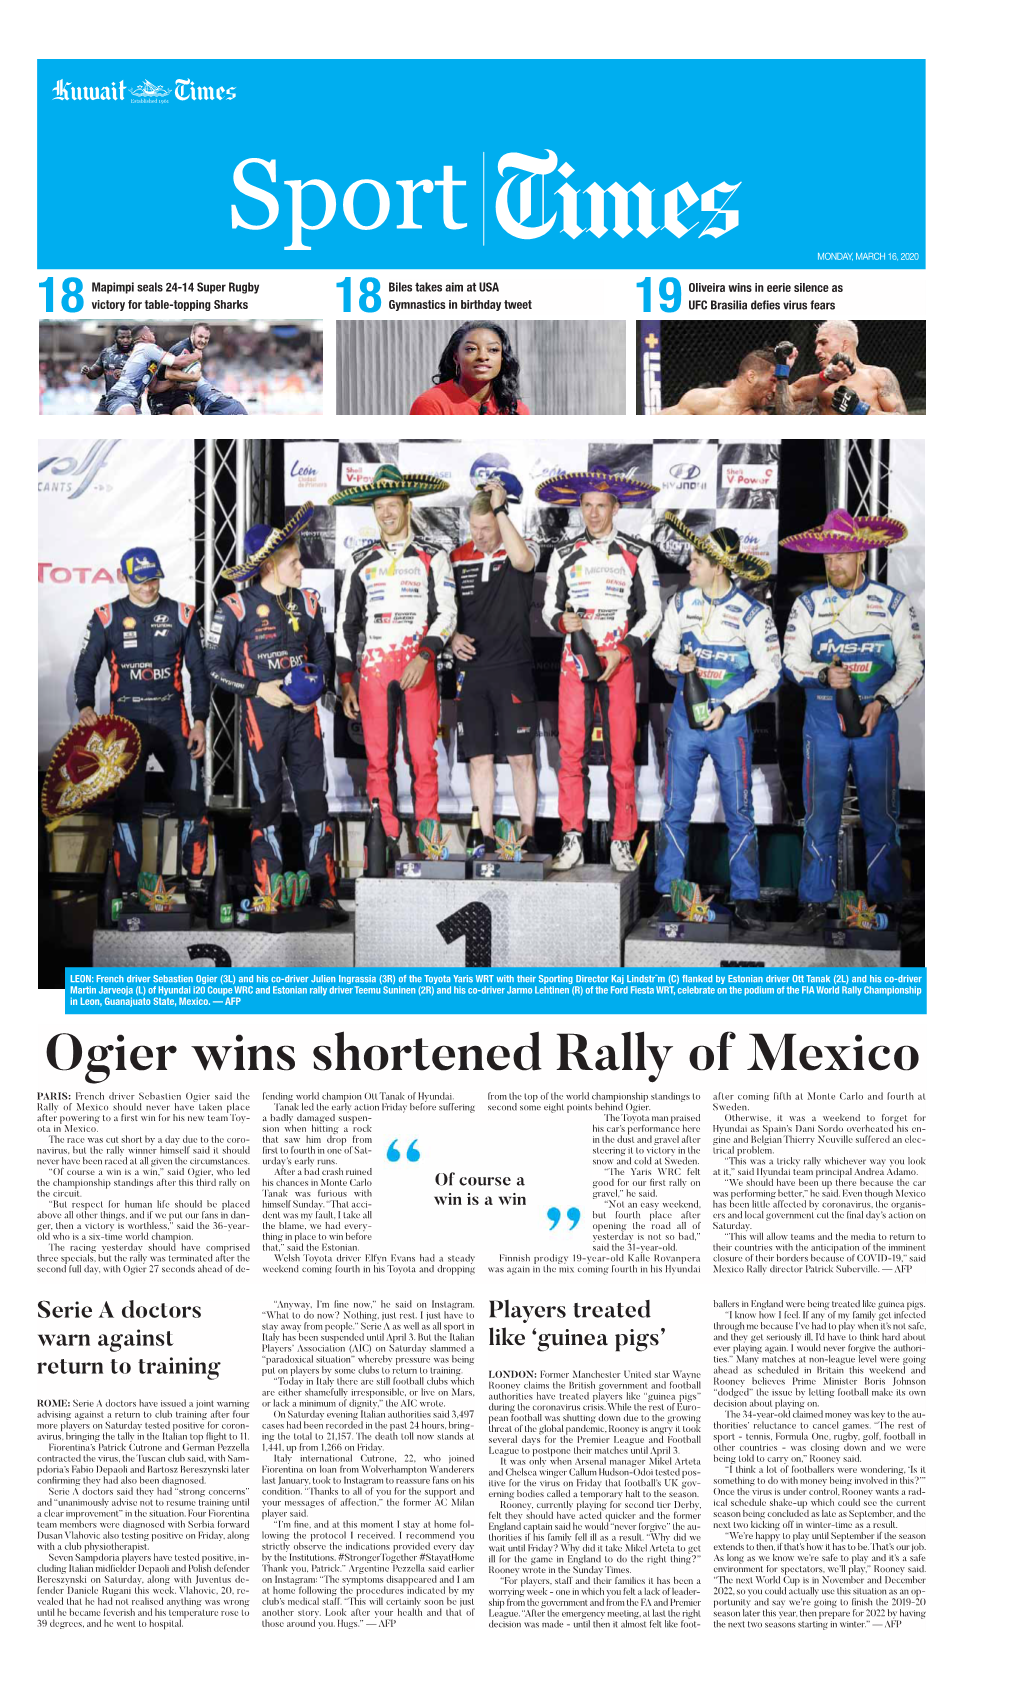 Ogier Wins Shortened Rally of Mexico